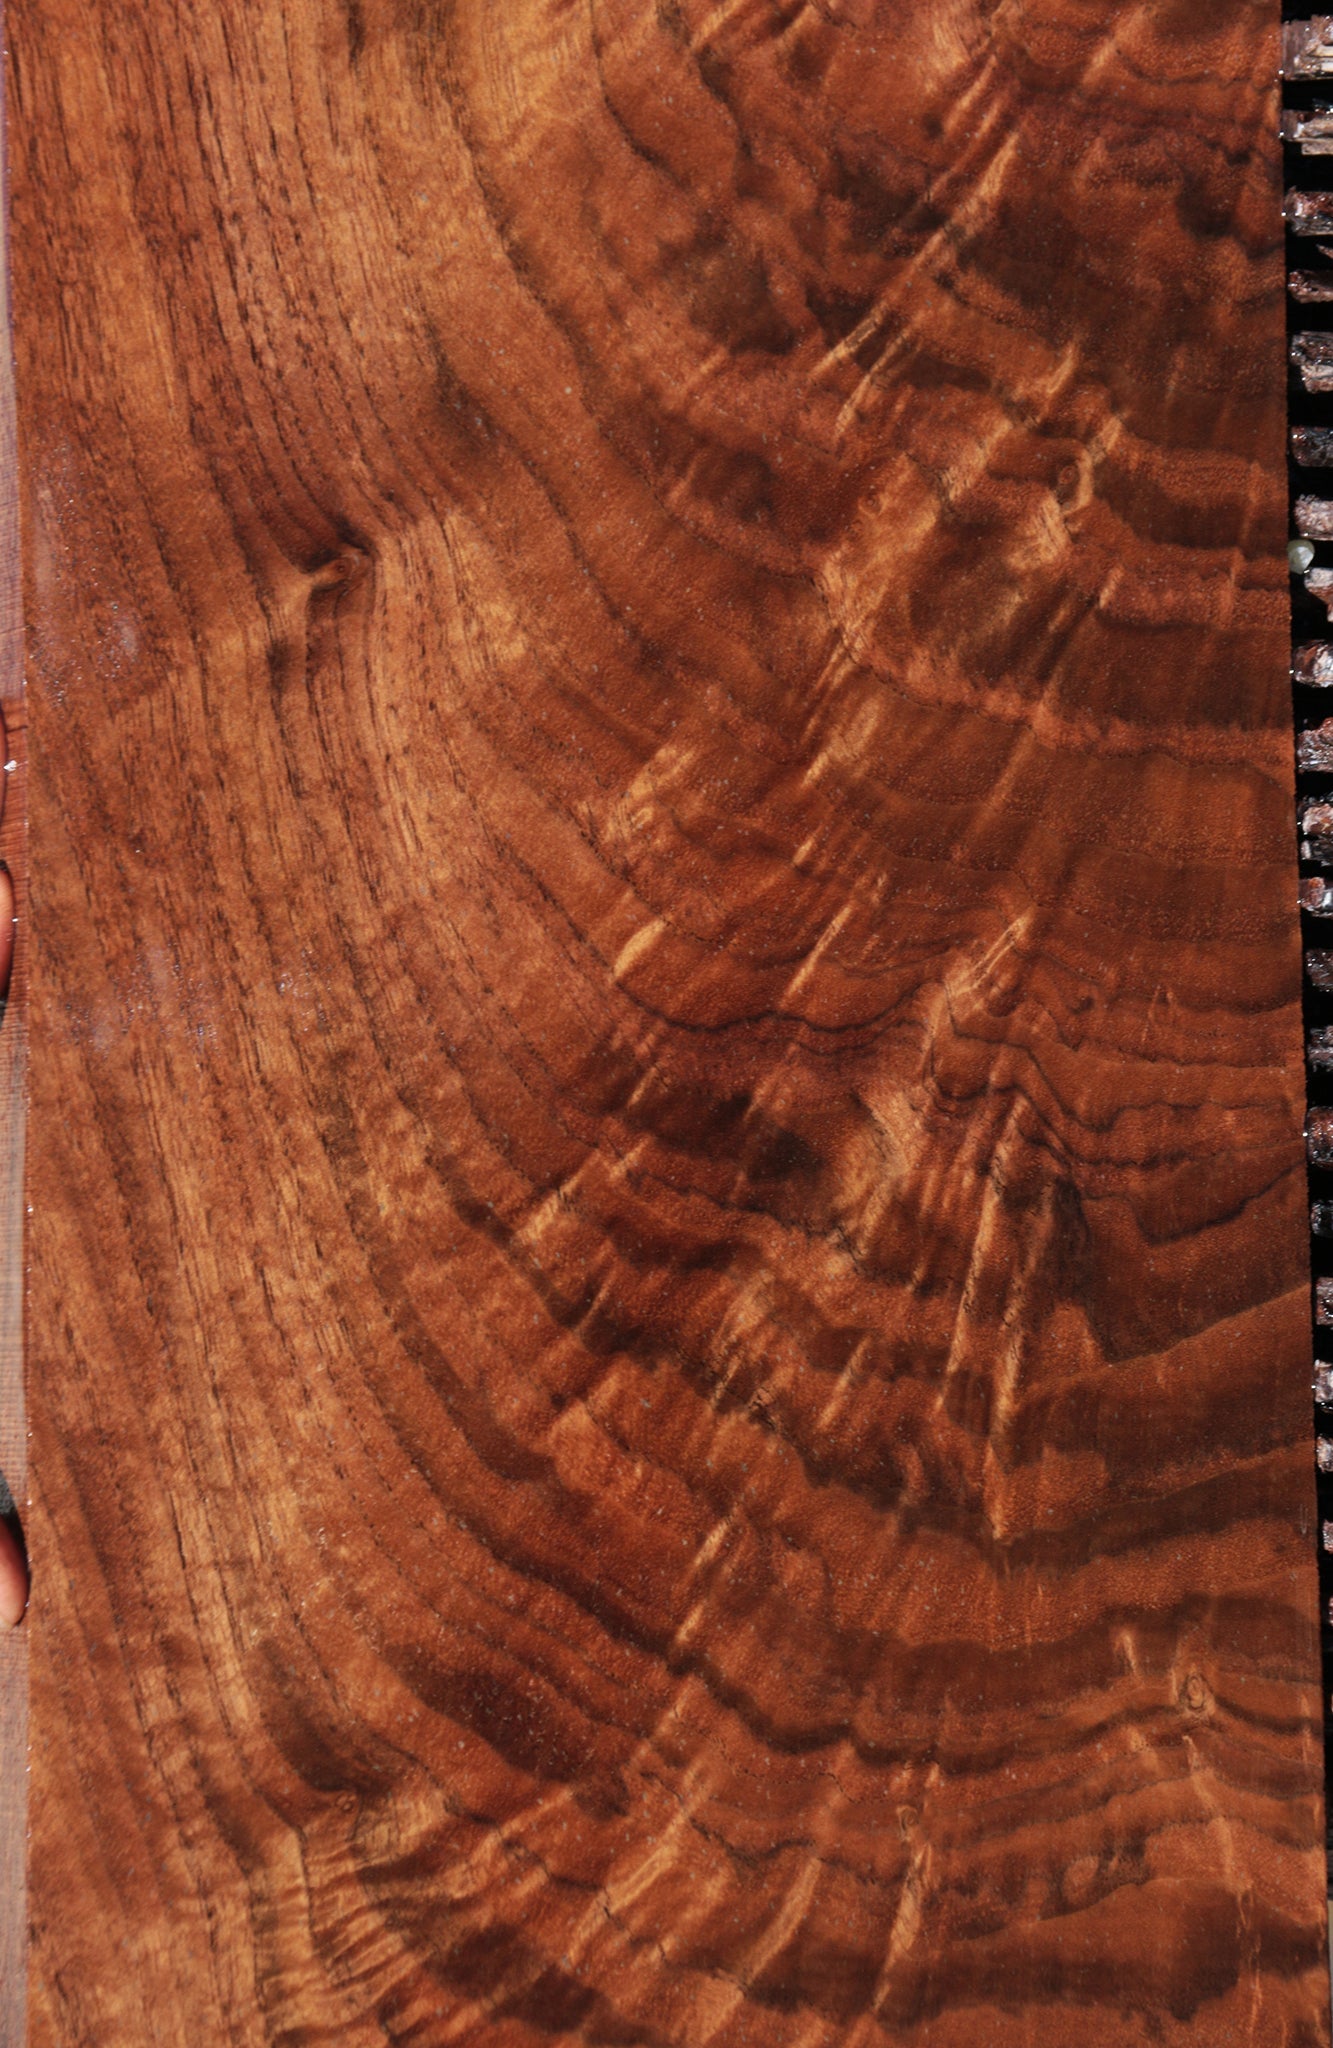 Exhibition Crotchwood Claro Walnut Instrument Lumber